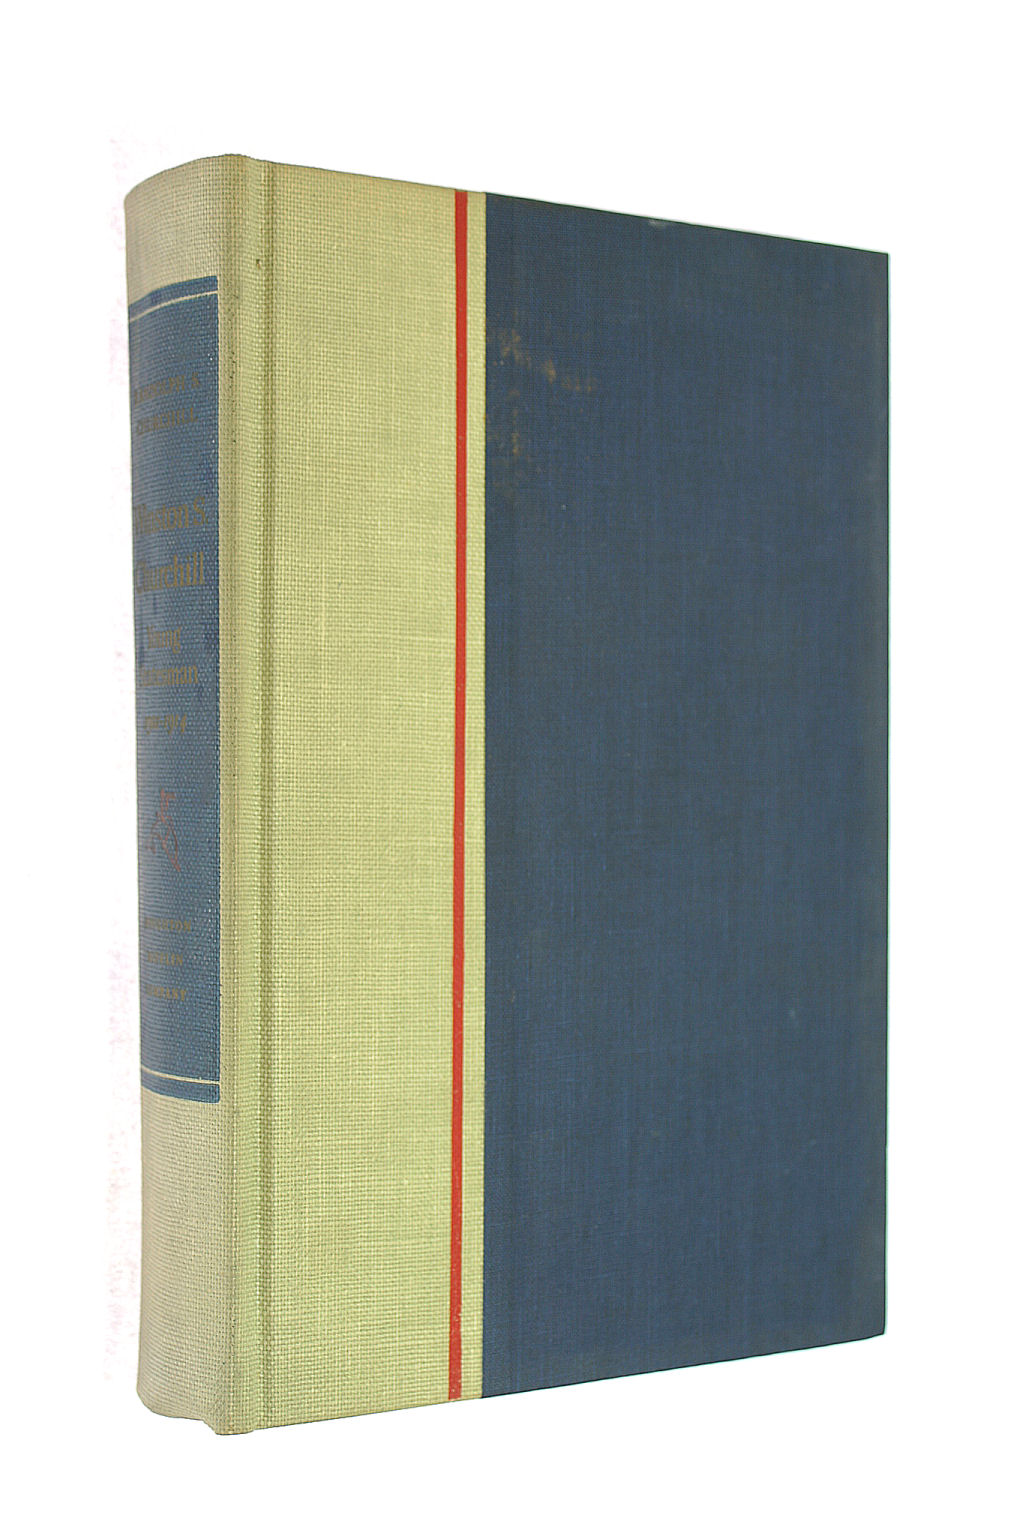 CHURCHILL,RANDOLPH - Winston S. Churchill Volume II Young Statesman 1901-1914